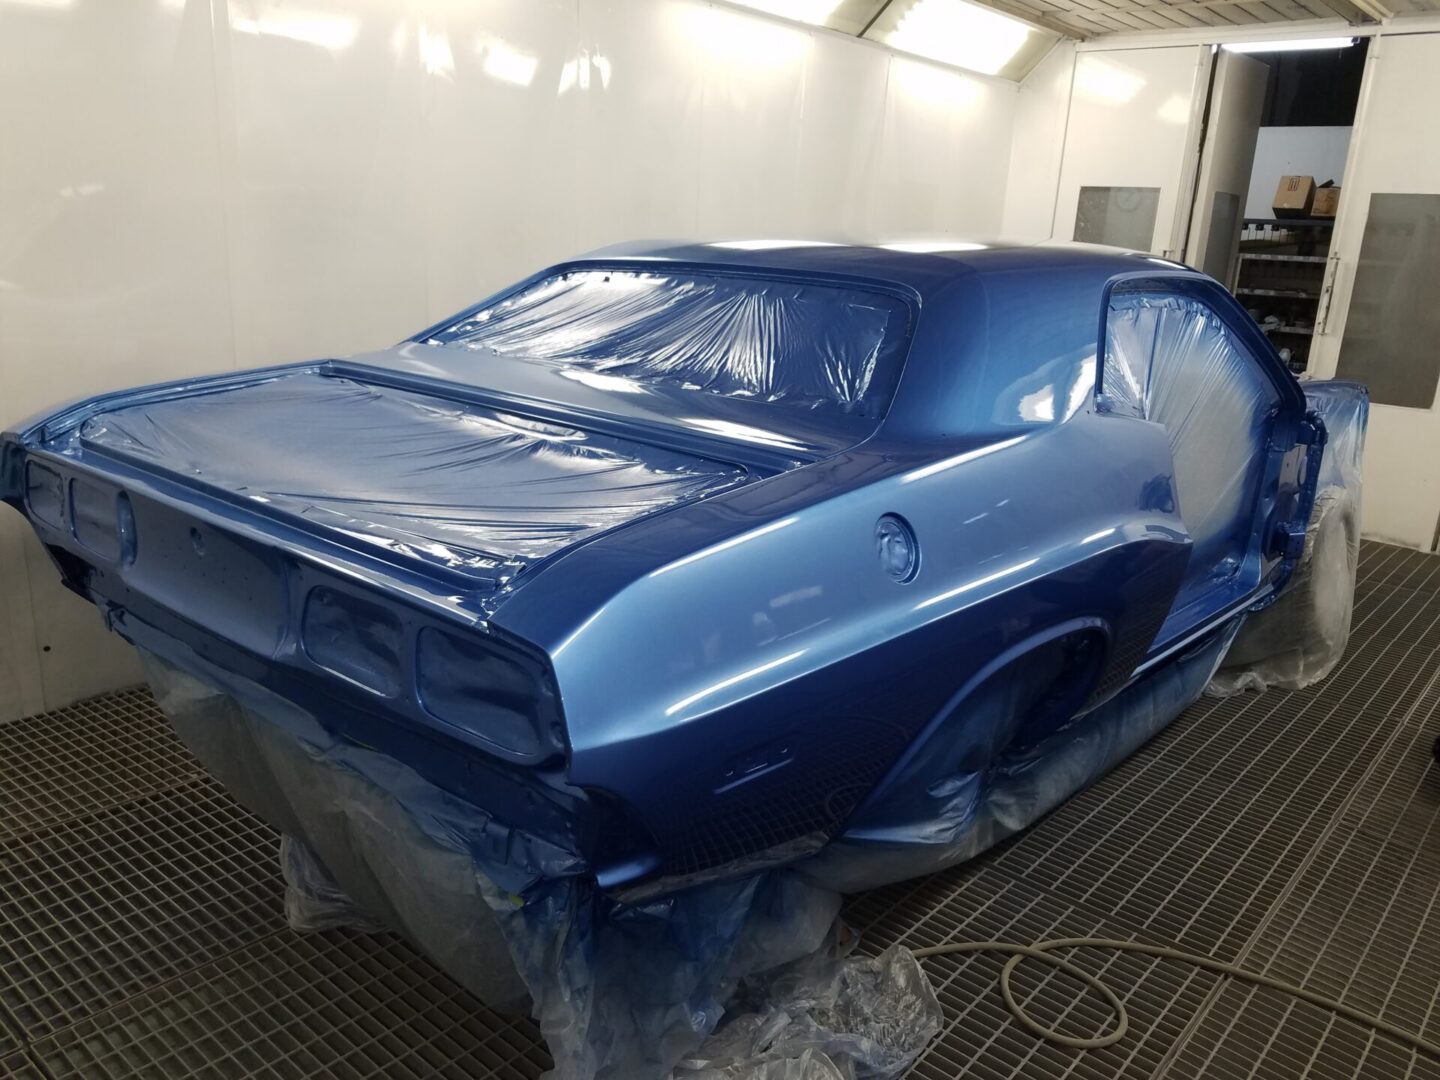 A blue pain over 1972 Dodge Challenger Rallye